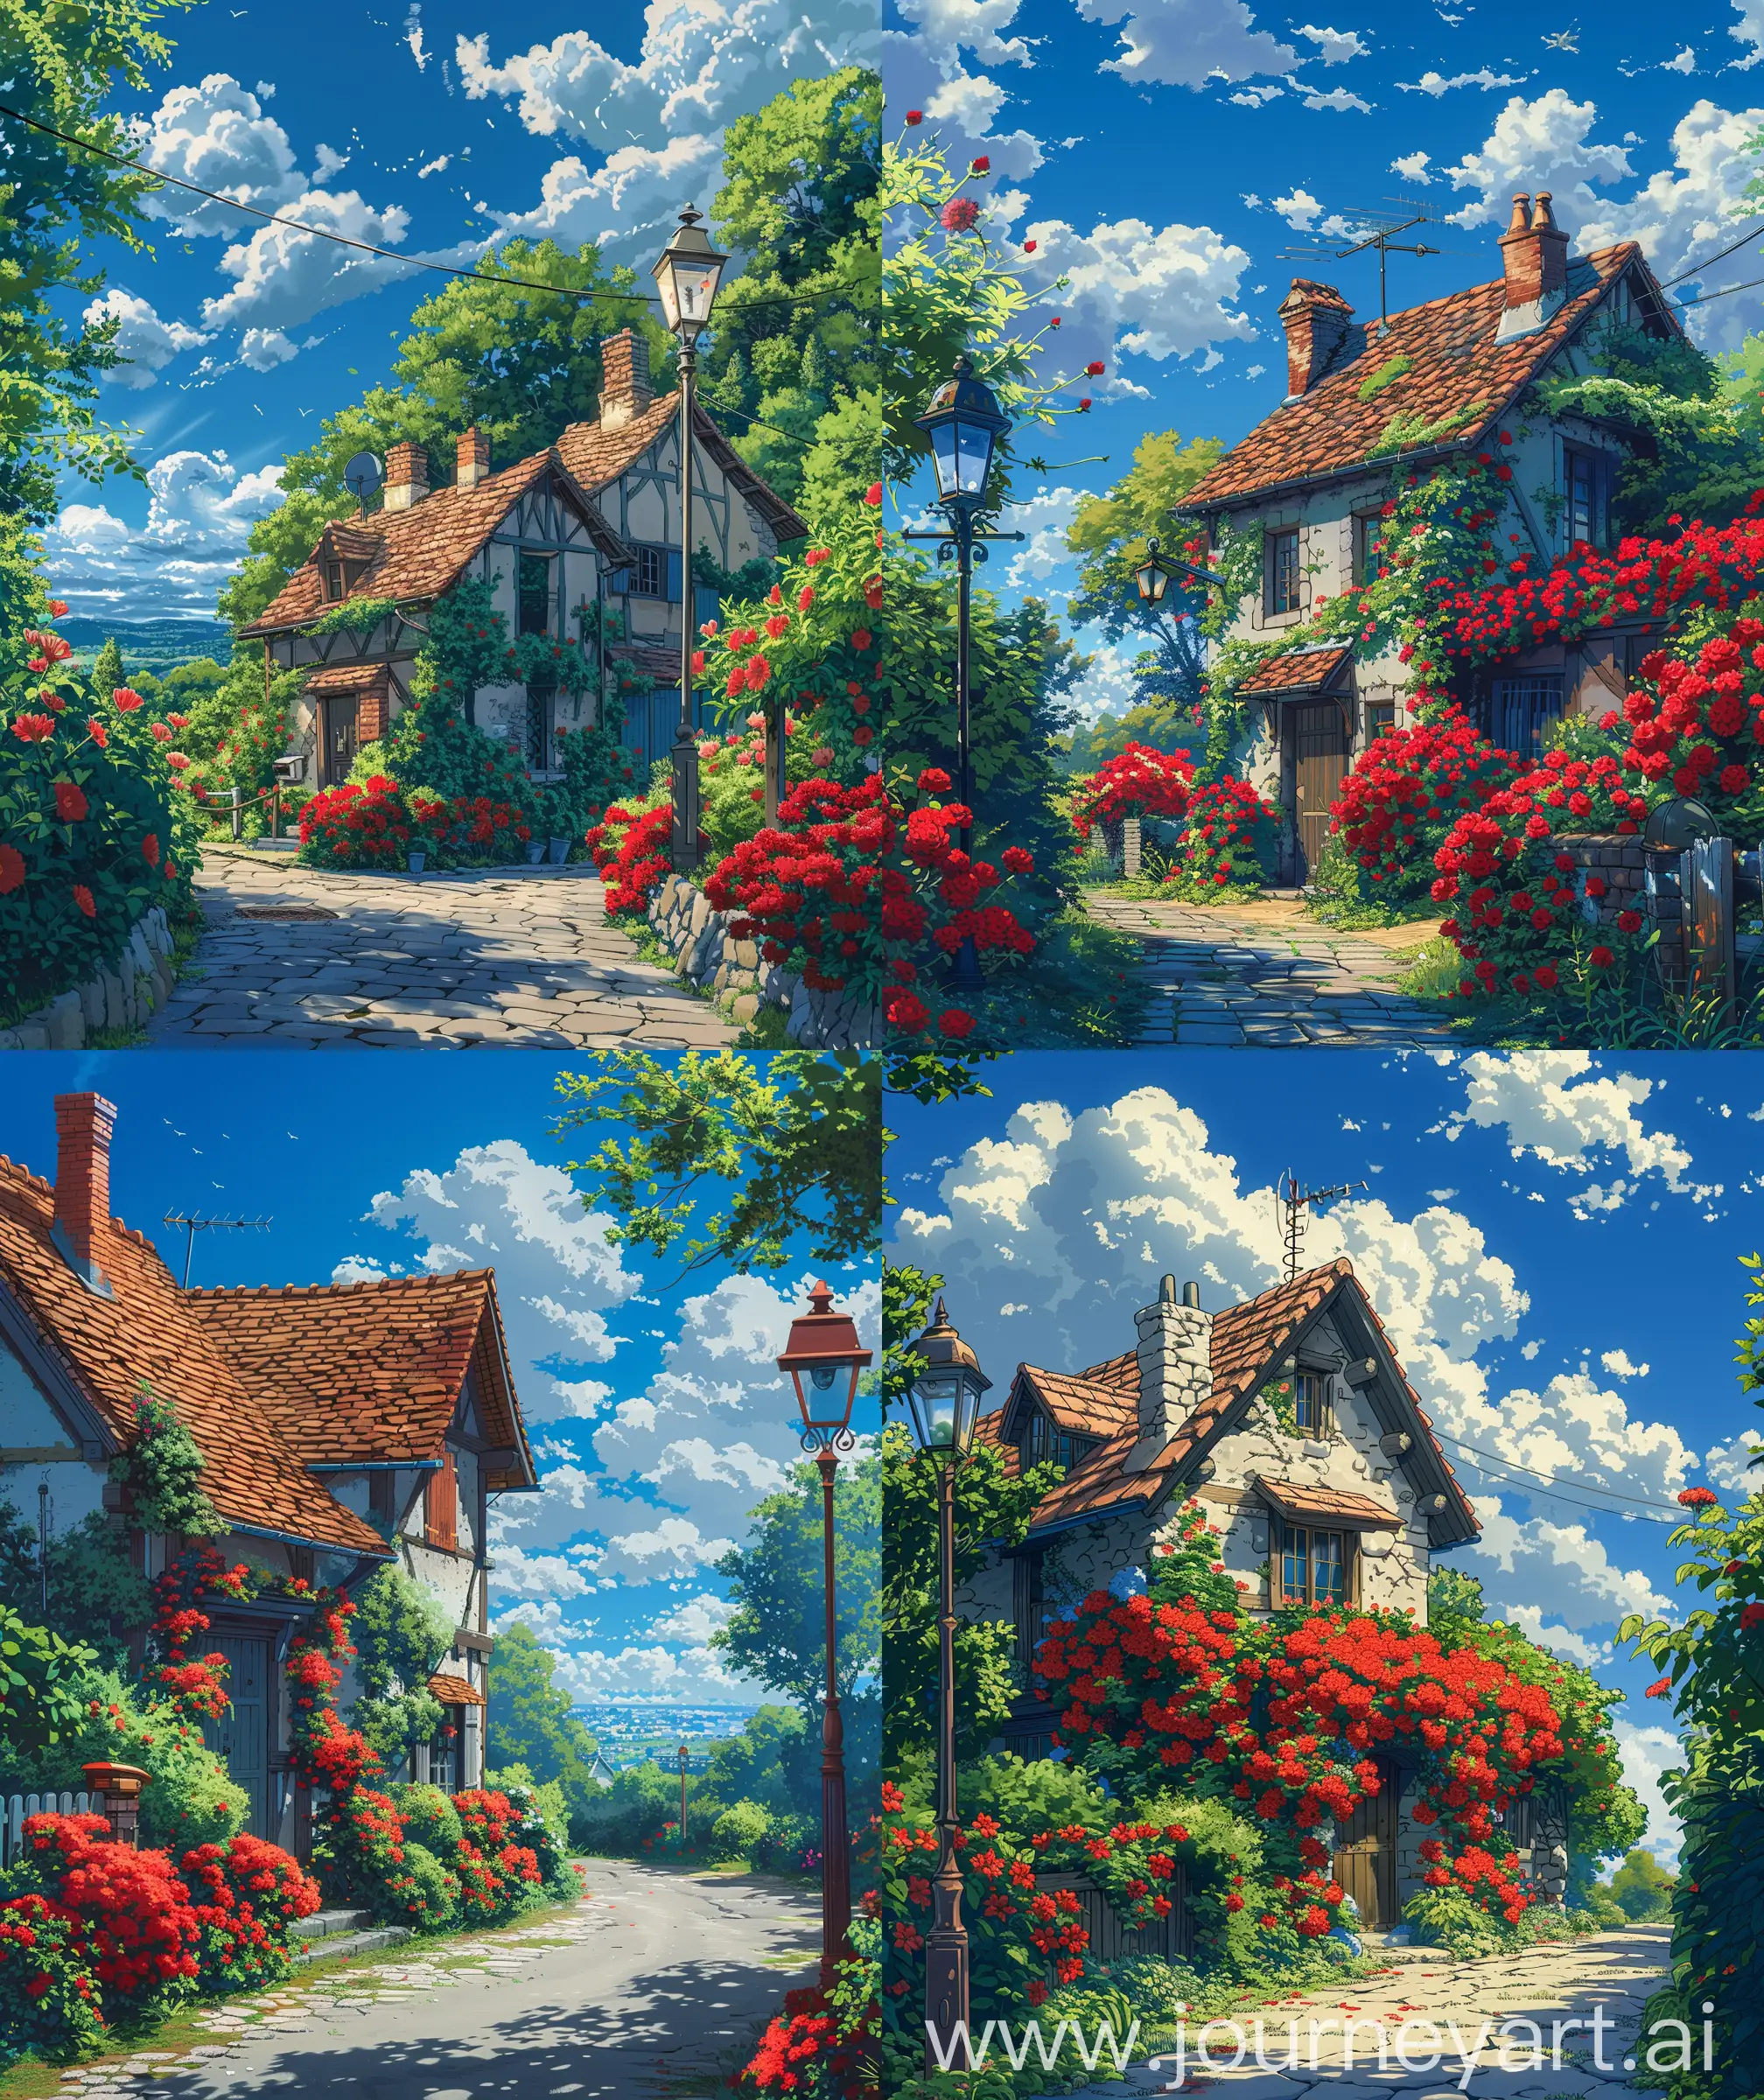 Enchanting-Anime-Cottage-in-French-Countryside-Makoto-Shinkai-and-Ghibli-Style